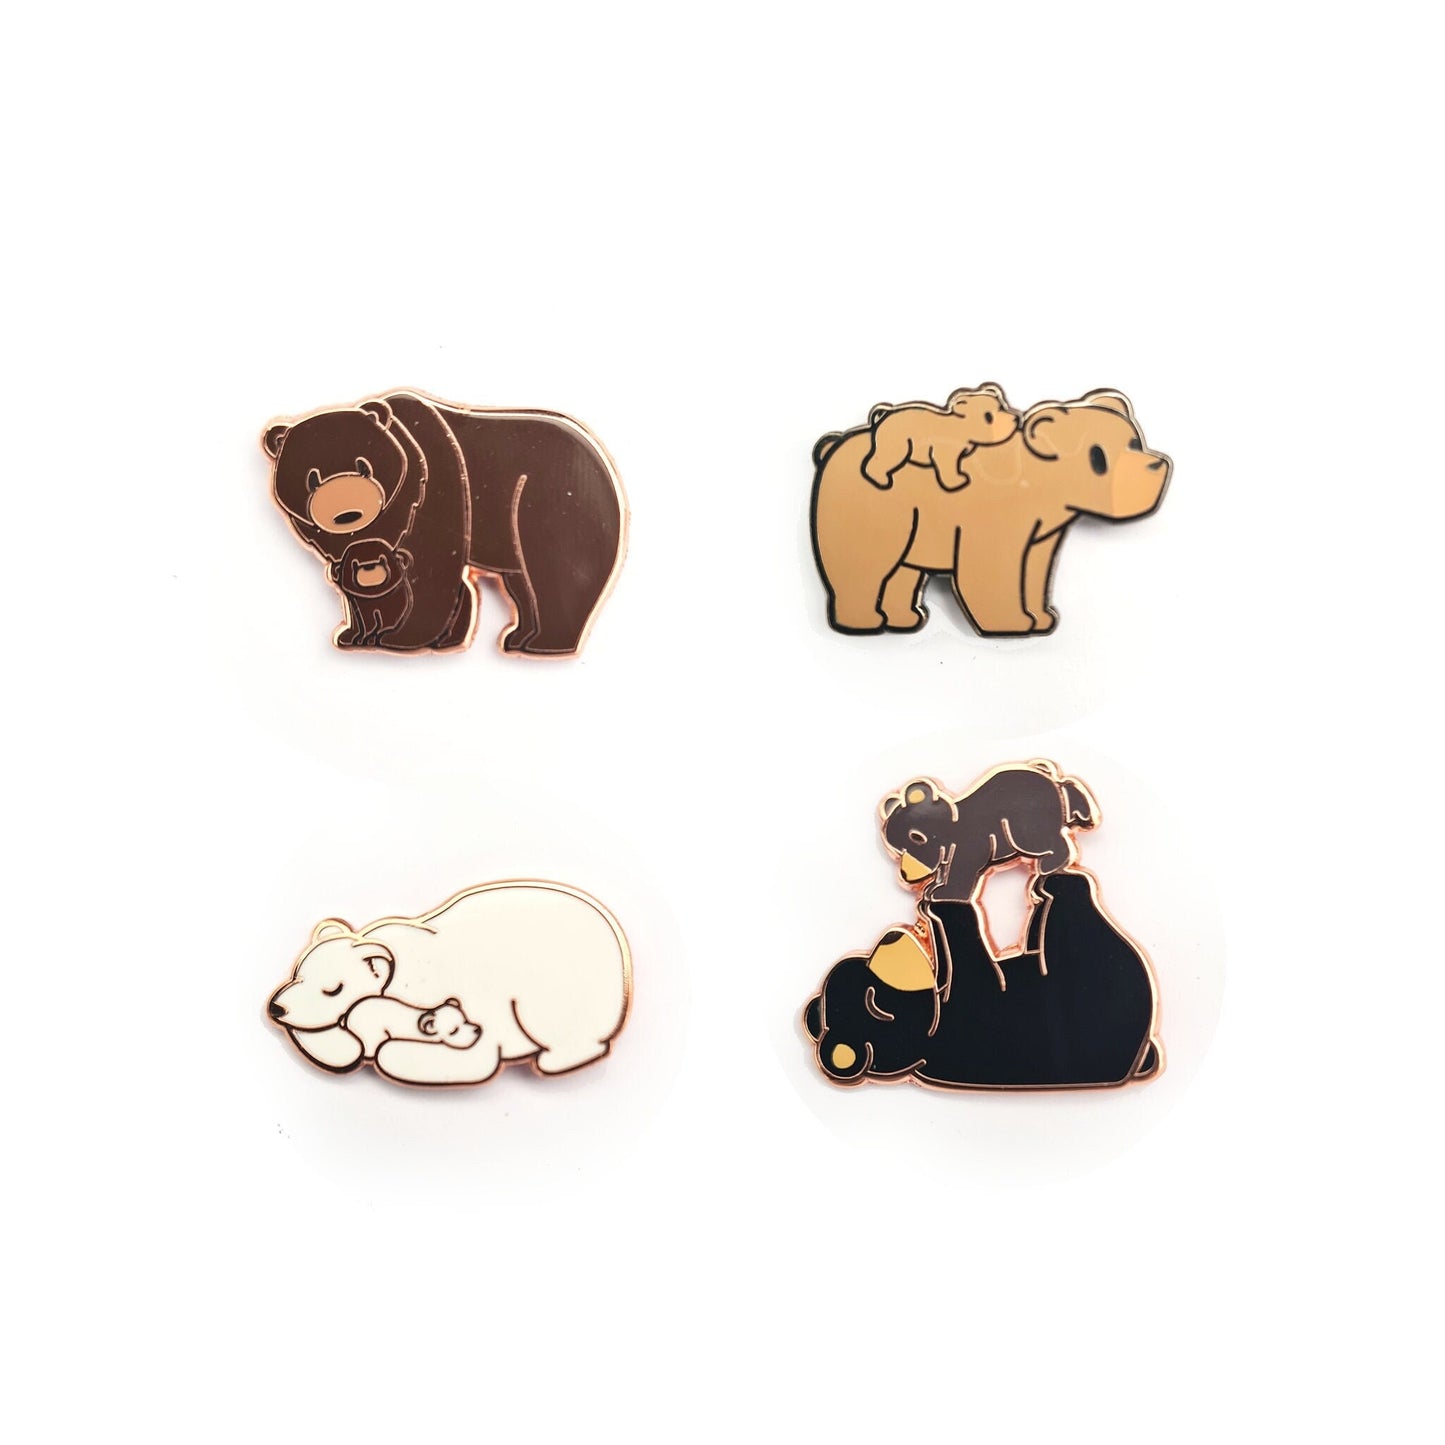 Mama Bear and Baby Bear, Playing - Small Enamel Pin, Mother’s Day Gift, Pins, Brooches & Lapel Pins